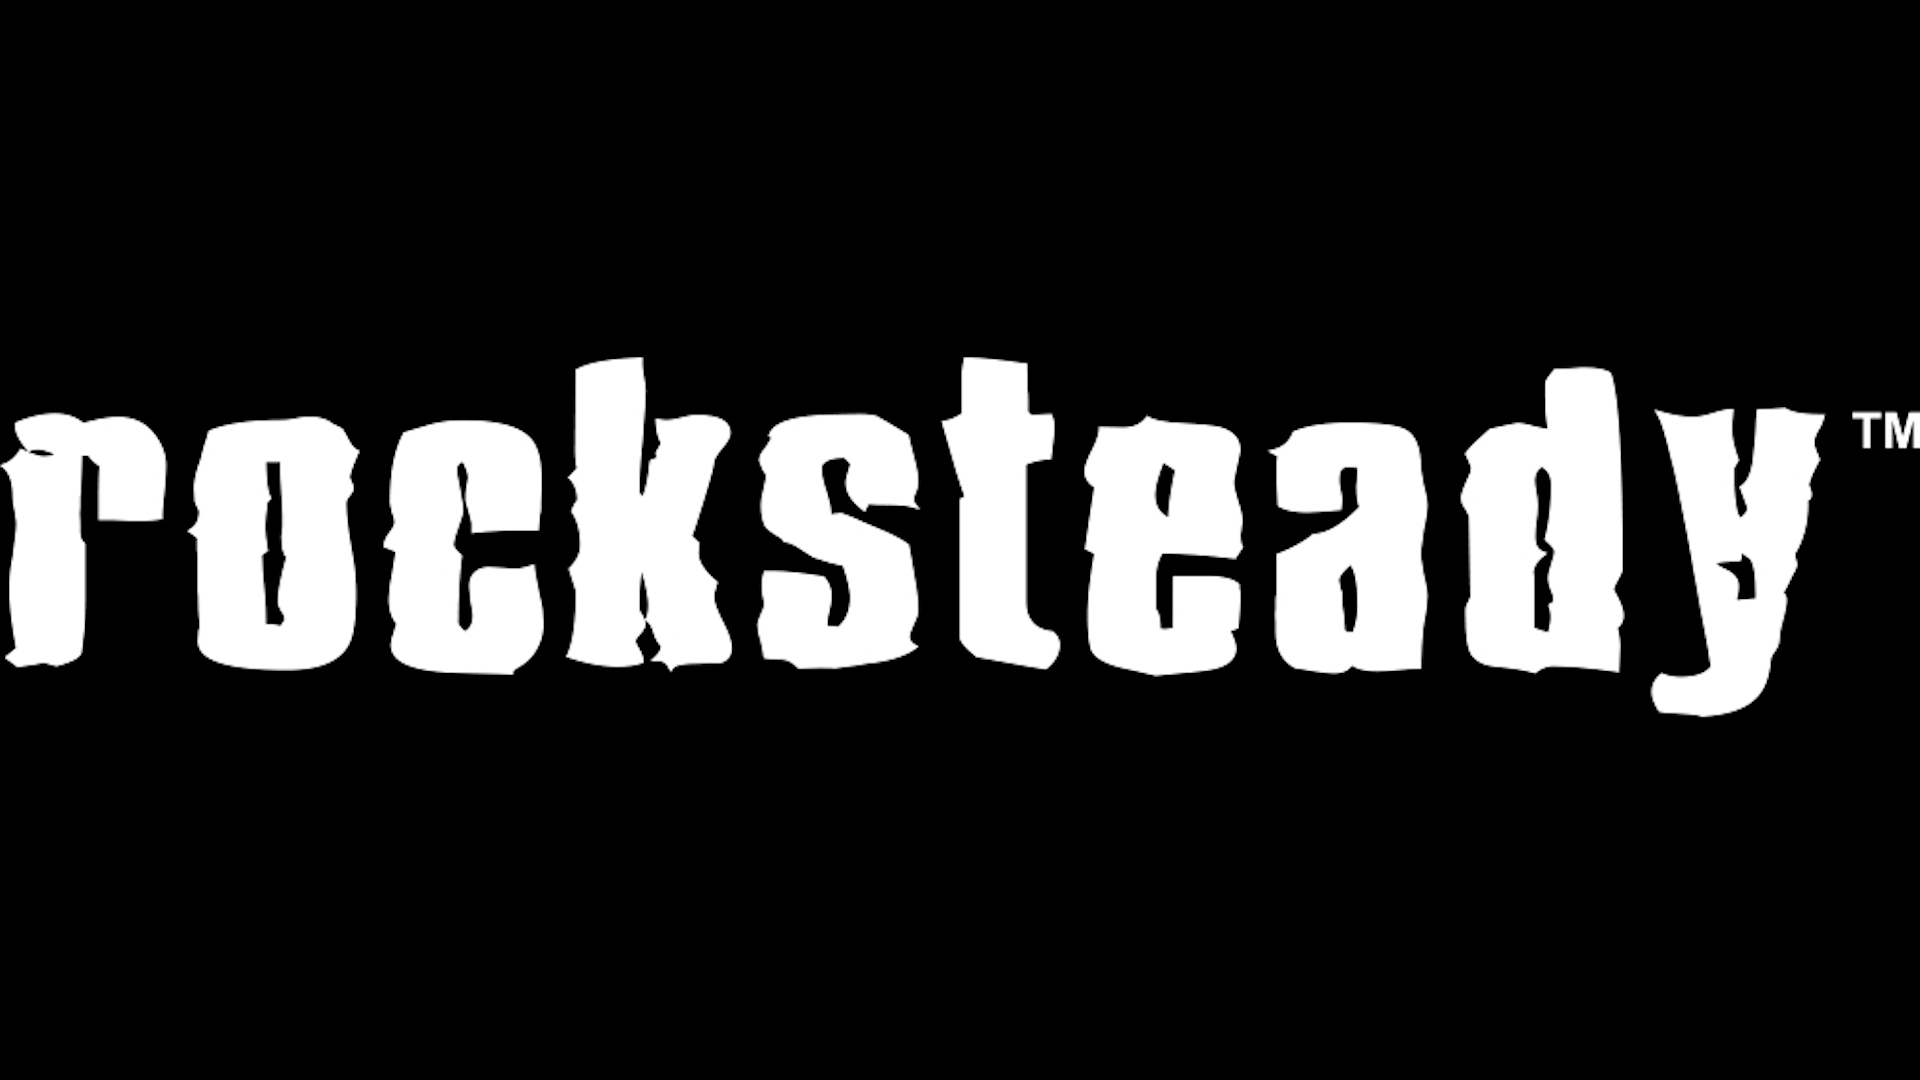 Rocksteady-logo